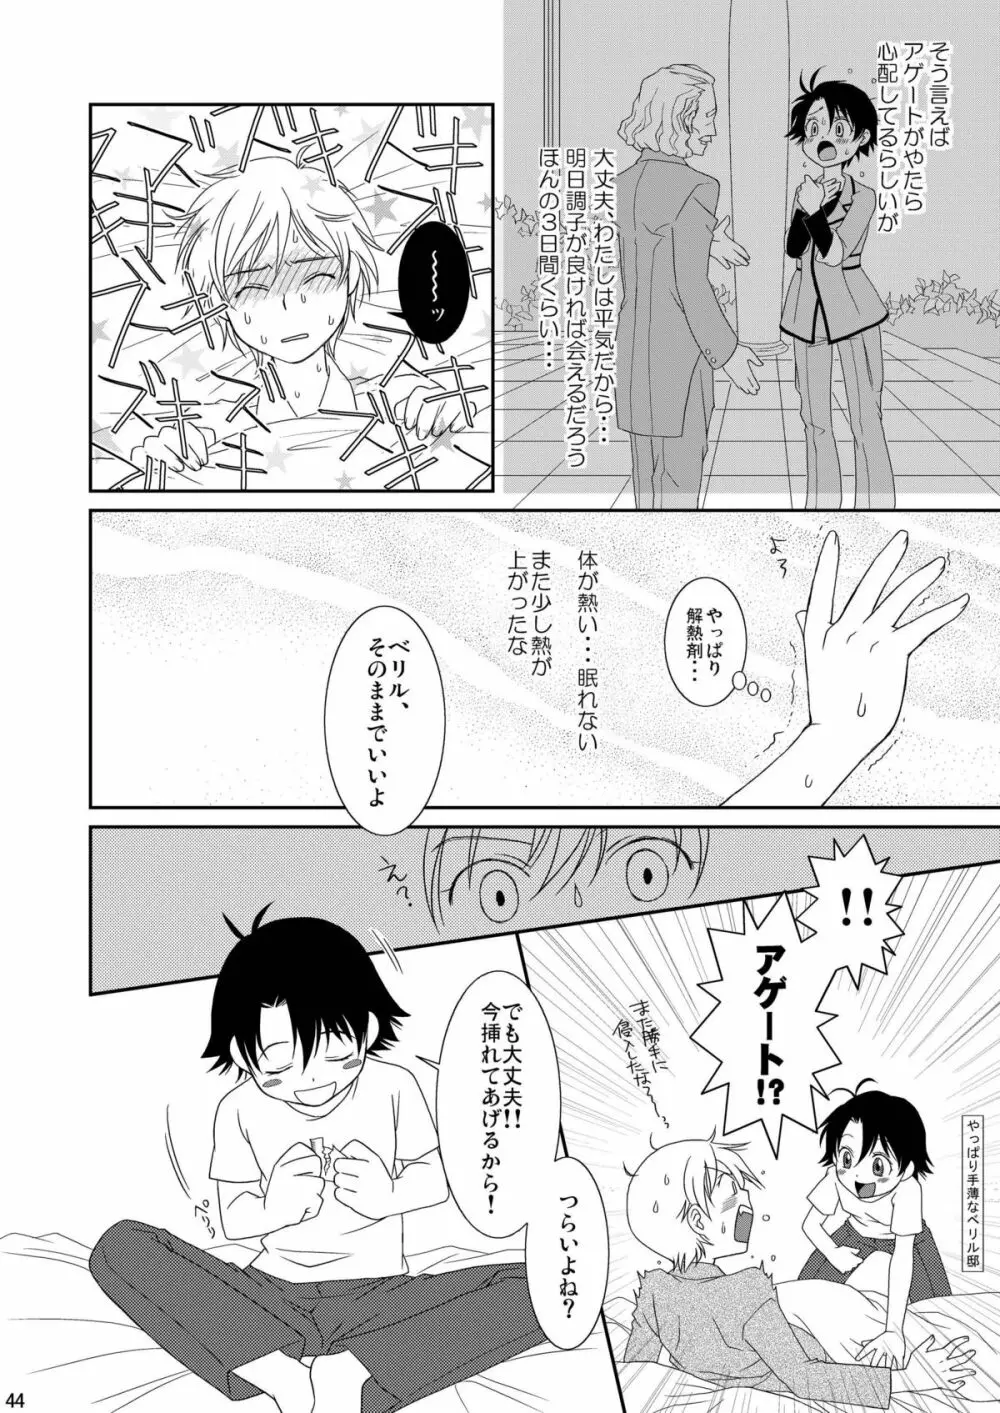 Re: ぷれい2 - page44